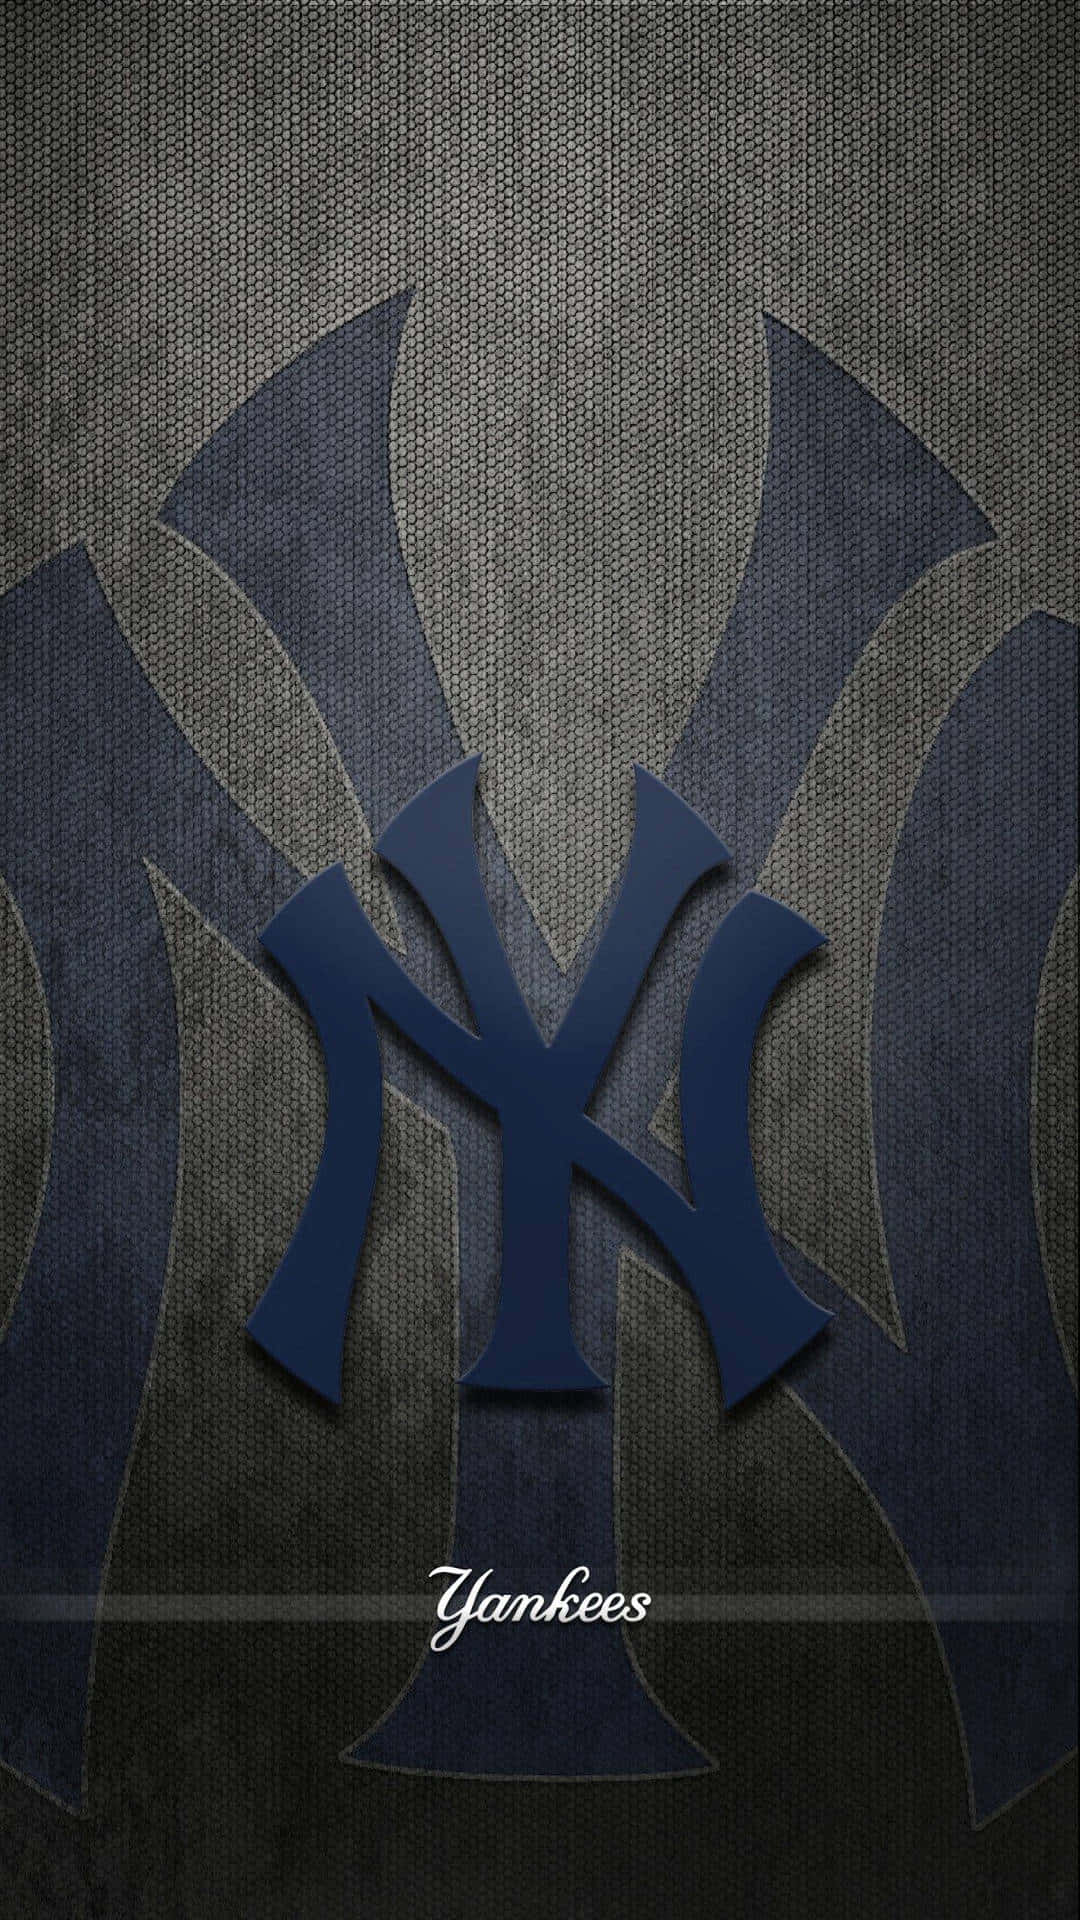 Newyork Yankees Hjemmebane. Wallpaper